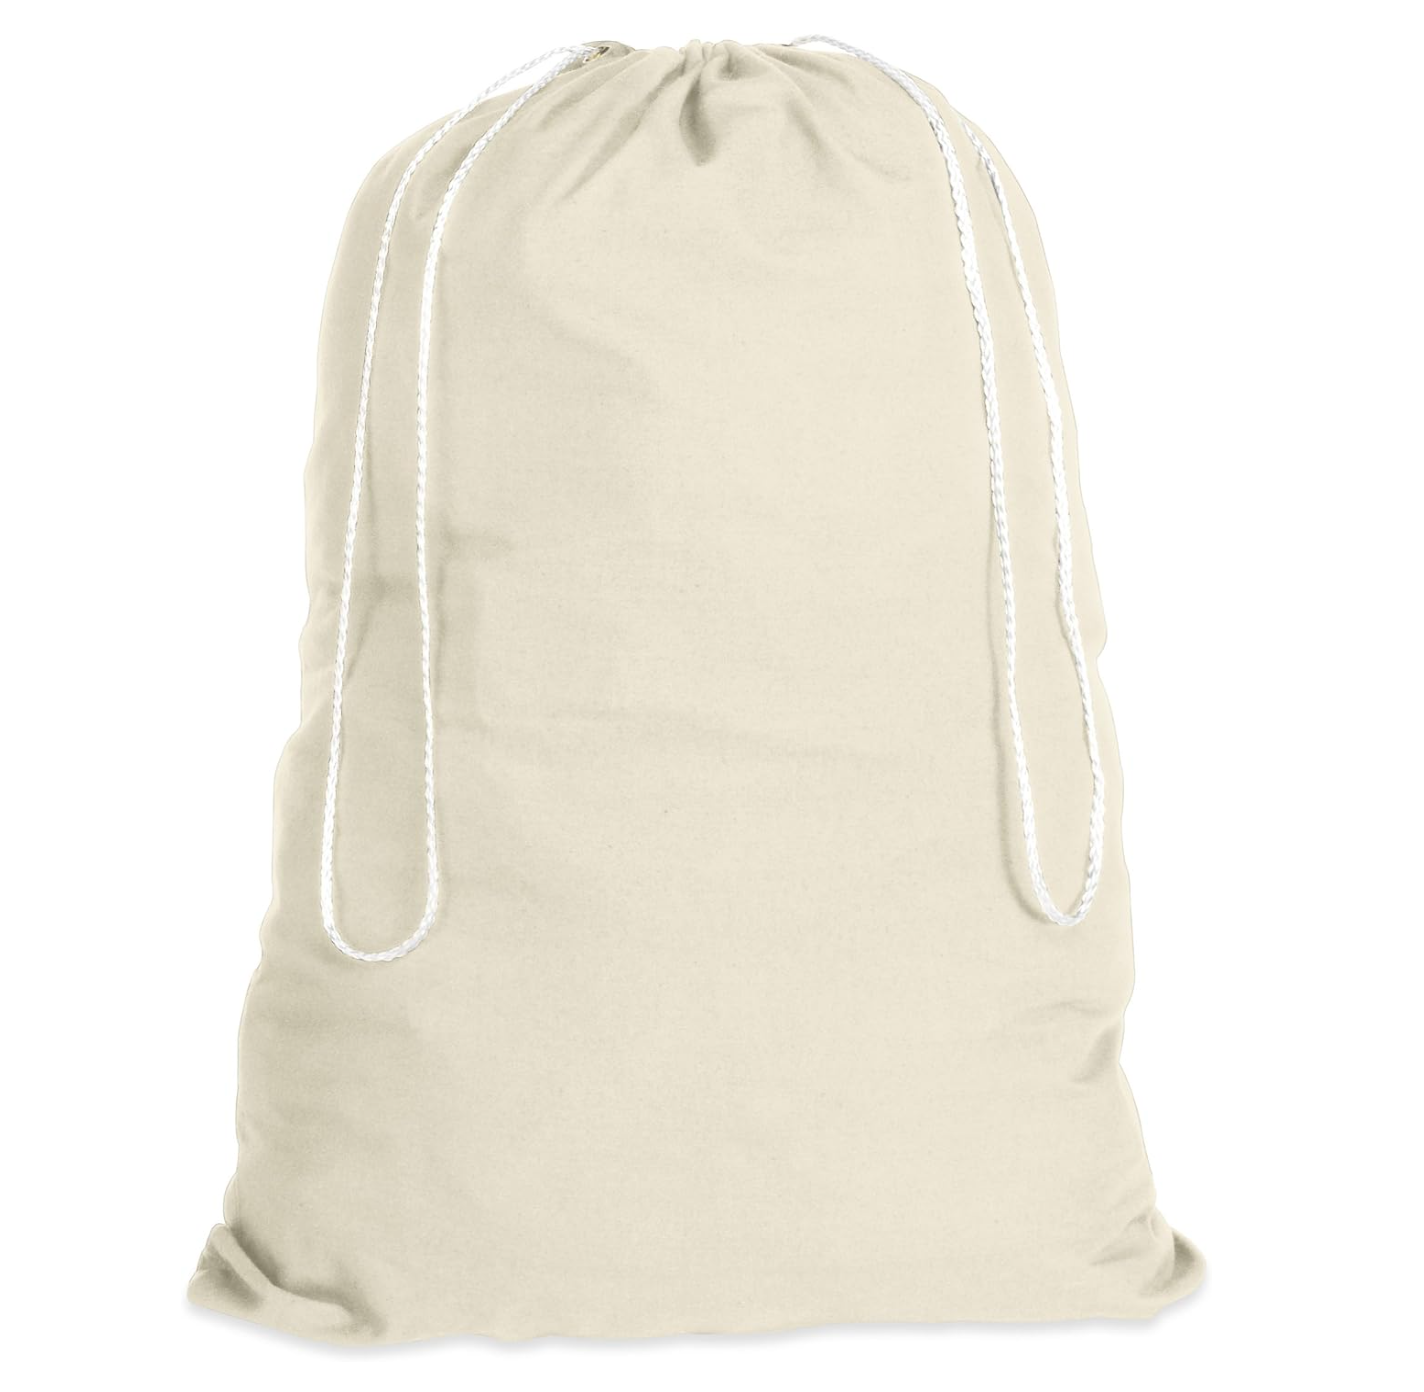 Whitmor Natural Cotton Laundry Bag – 50lb. Capacity